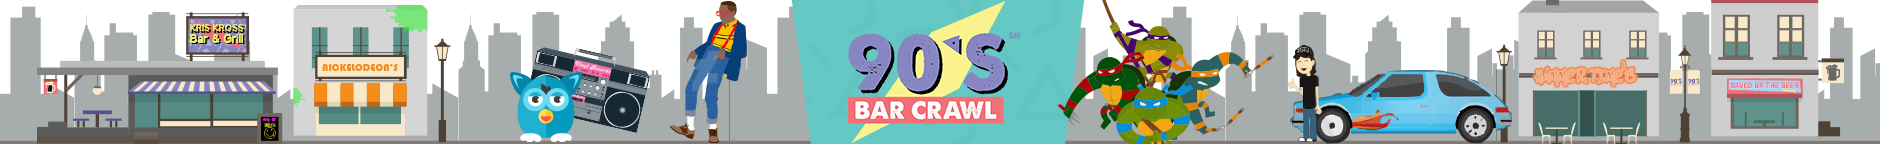 90's Bar Crawl - Cleveland